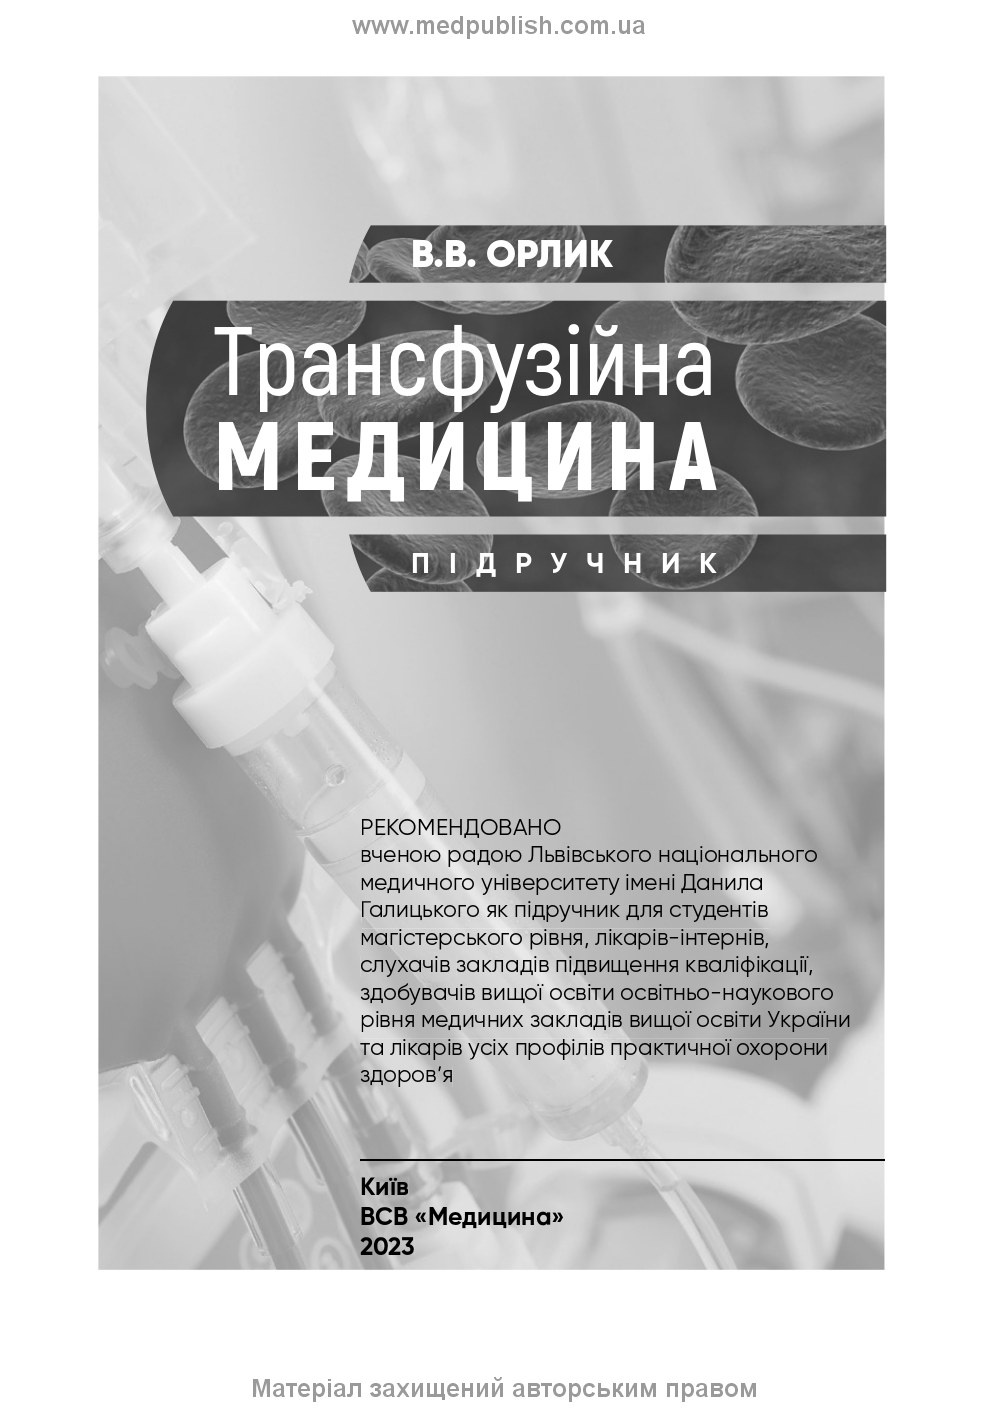 Трансфузійна медицина: підручник. Автор — В.В. Орлик. 